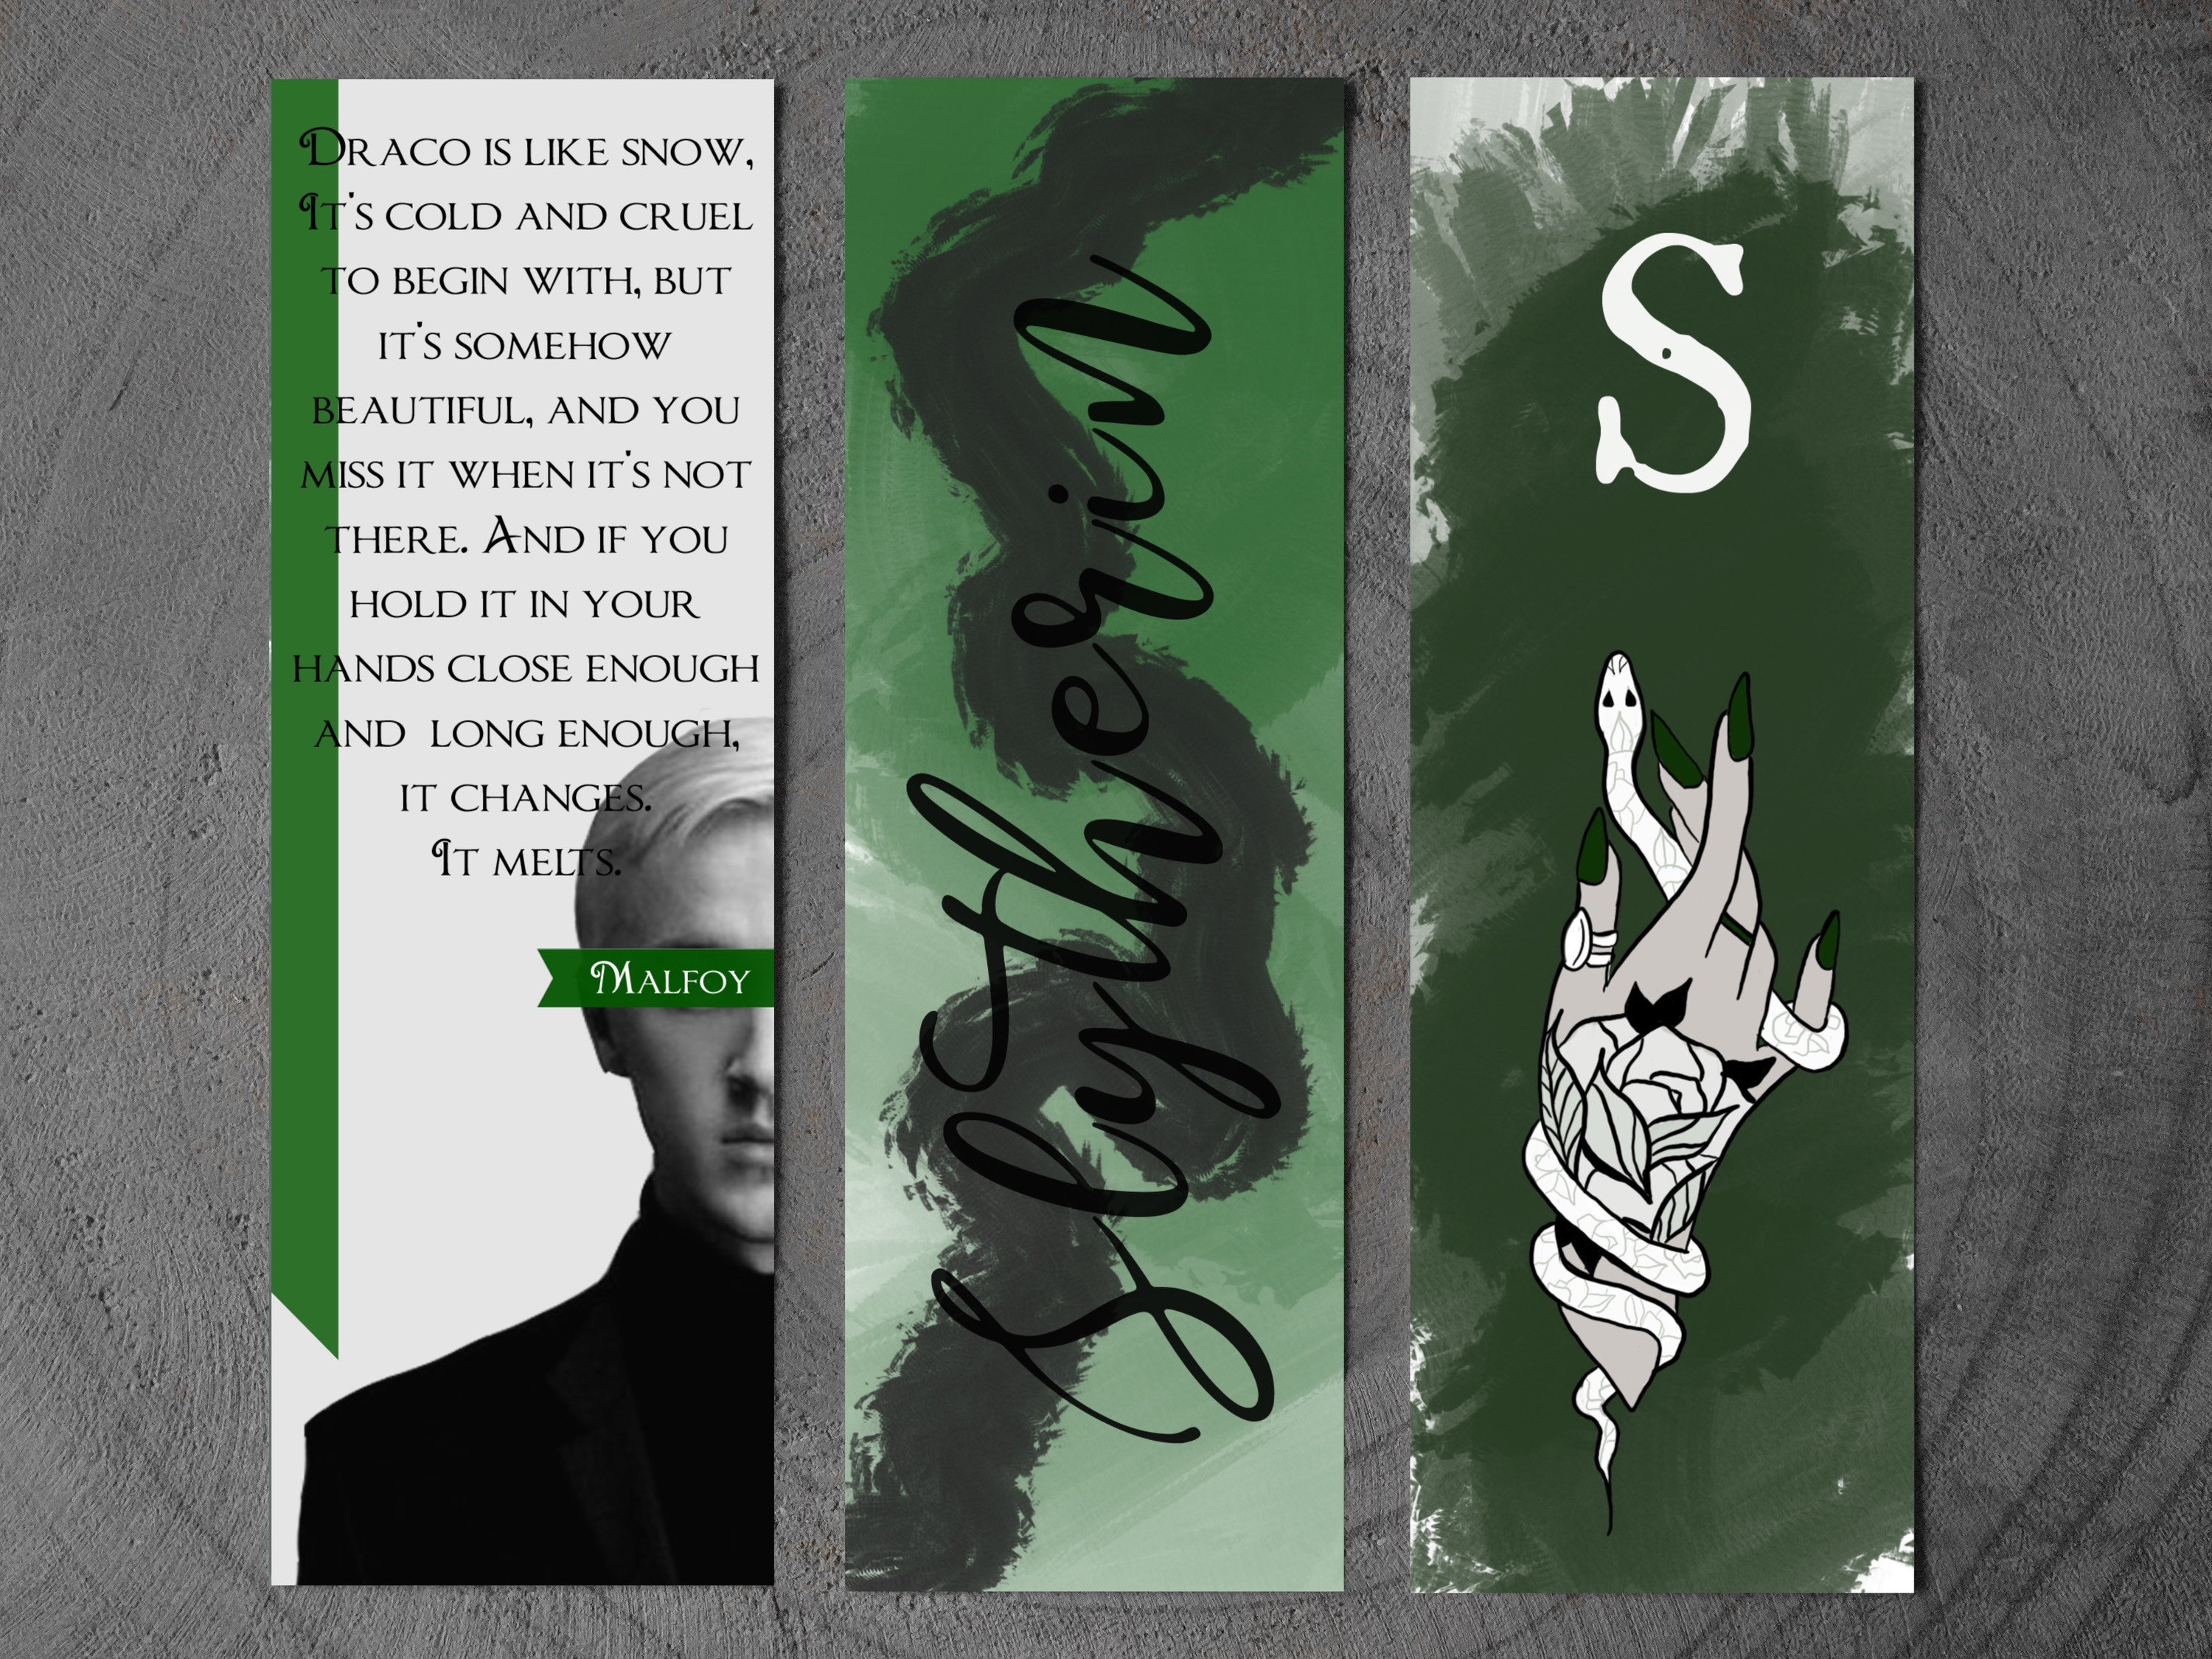 Draco Malfoy - Harry Potter postcard